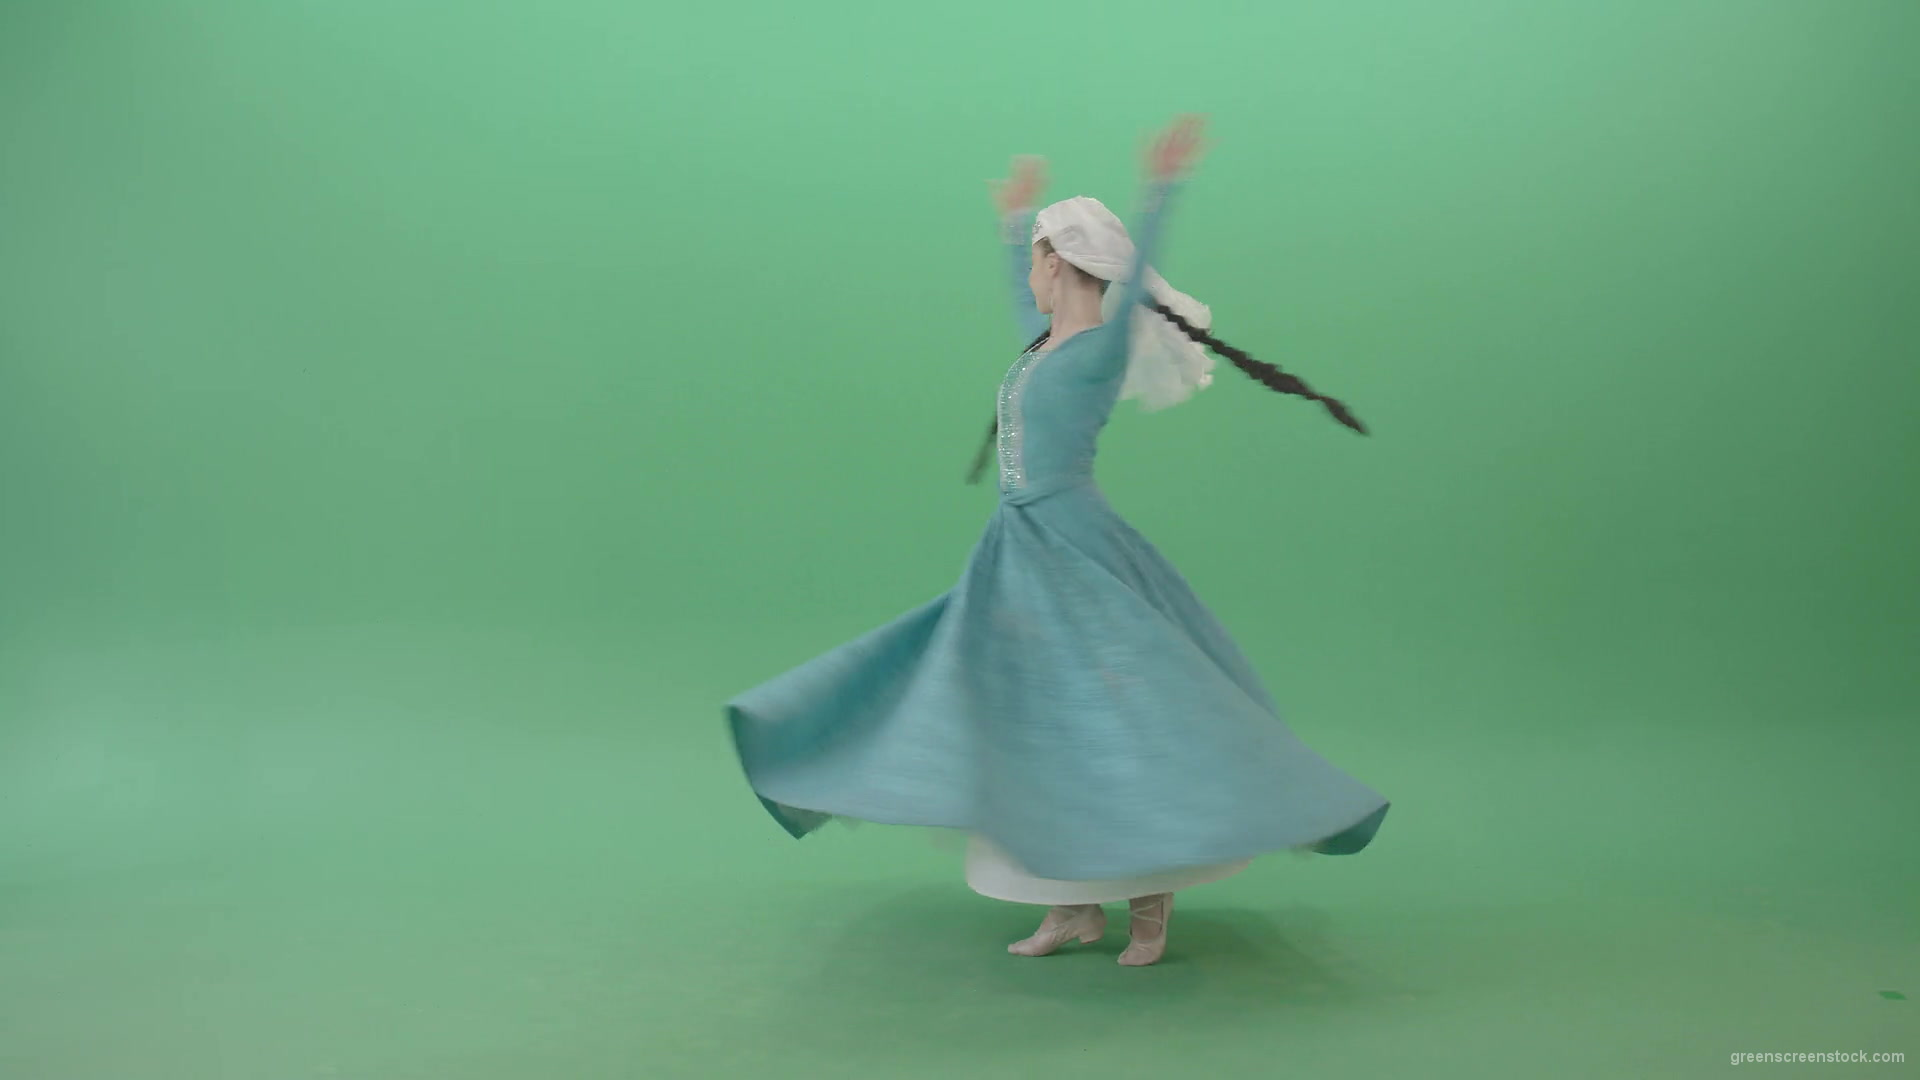 Iberian-Colchis-Woman-spinning-Georgian-Perkhuli-dance-in-blue-dress-isolated-on-Green-Screen-4K-Video-Footage-1920_007 Green Screen Stock